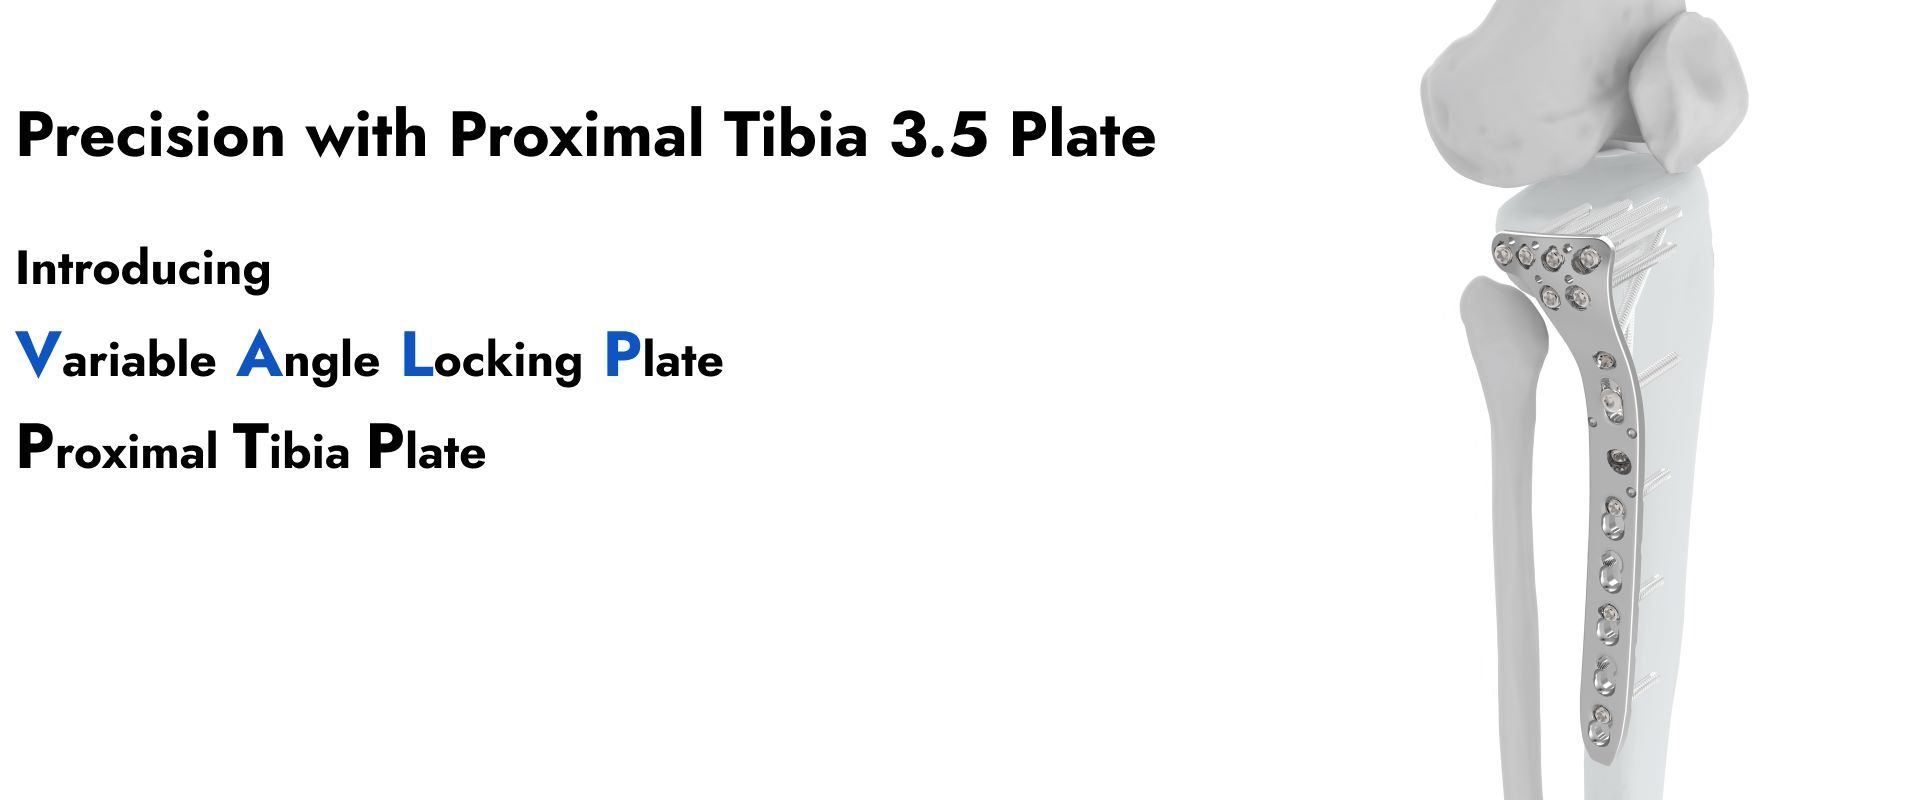 Web Banner VALP Proximal Tibia Plate